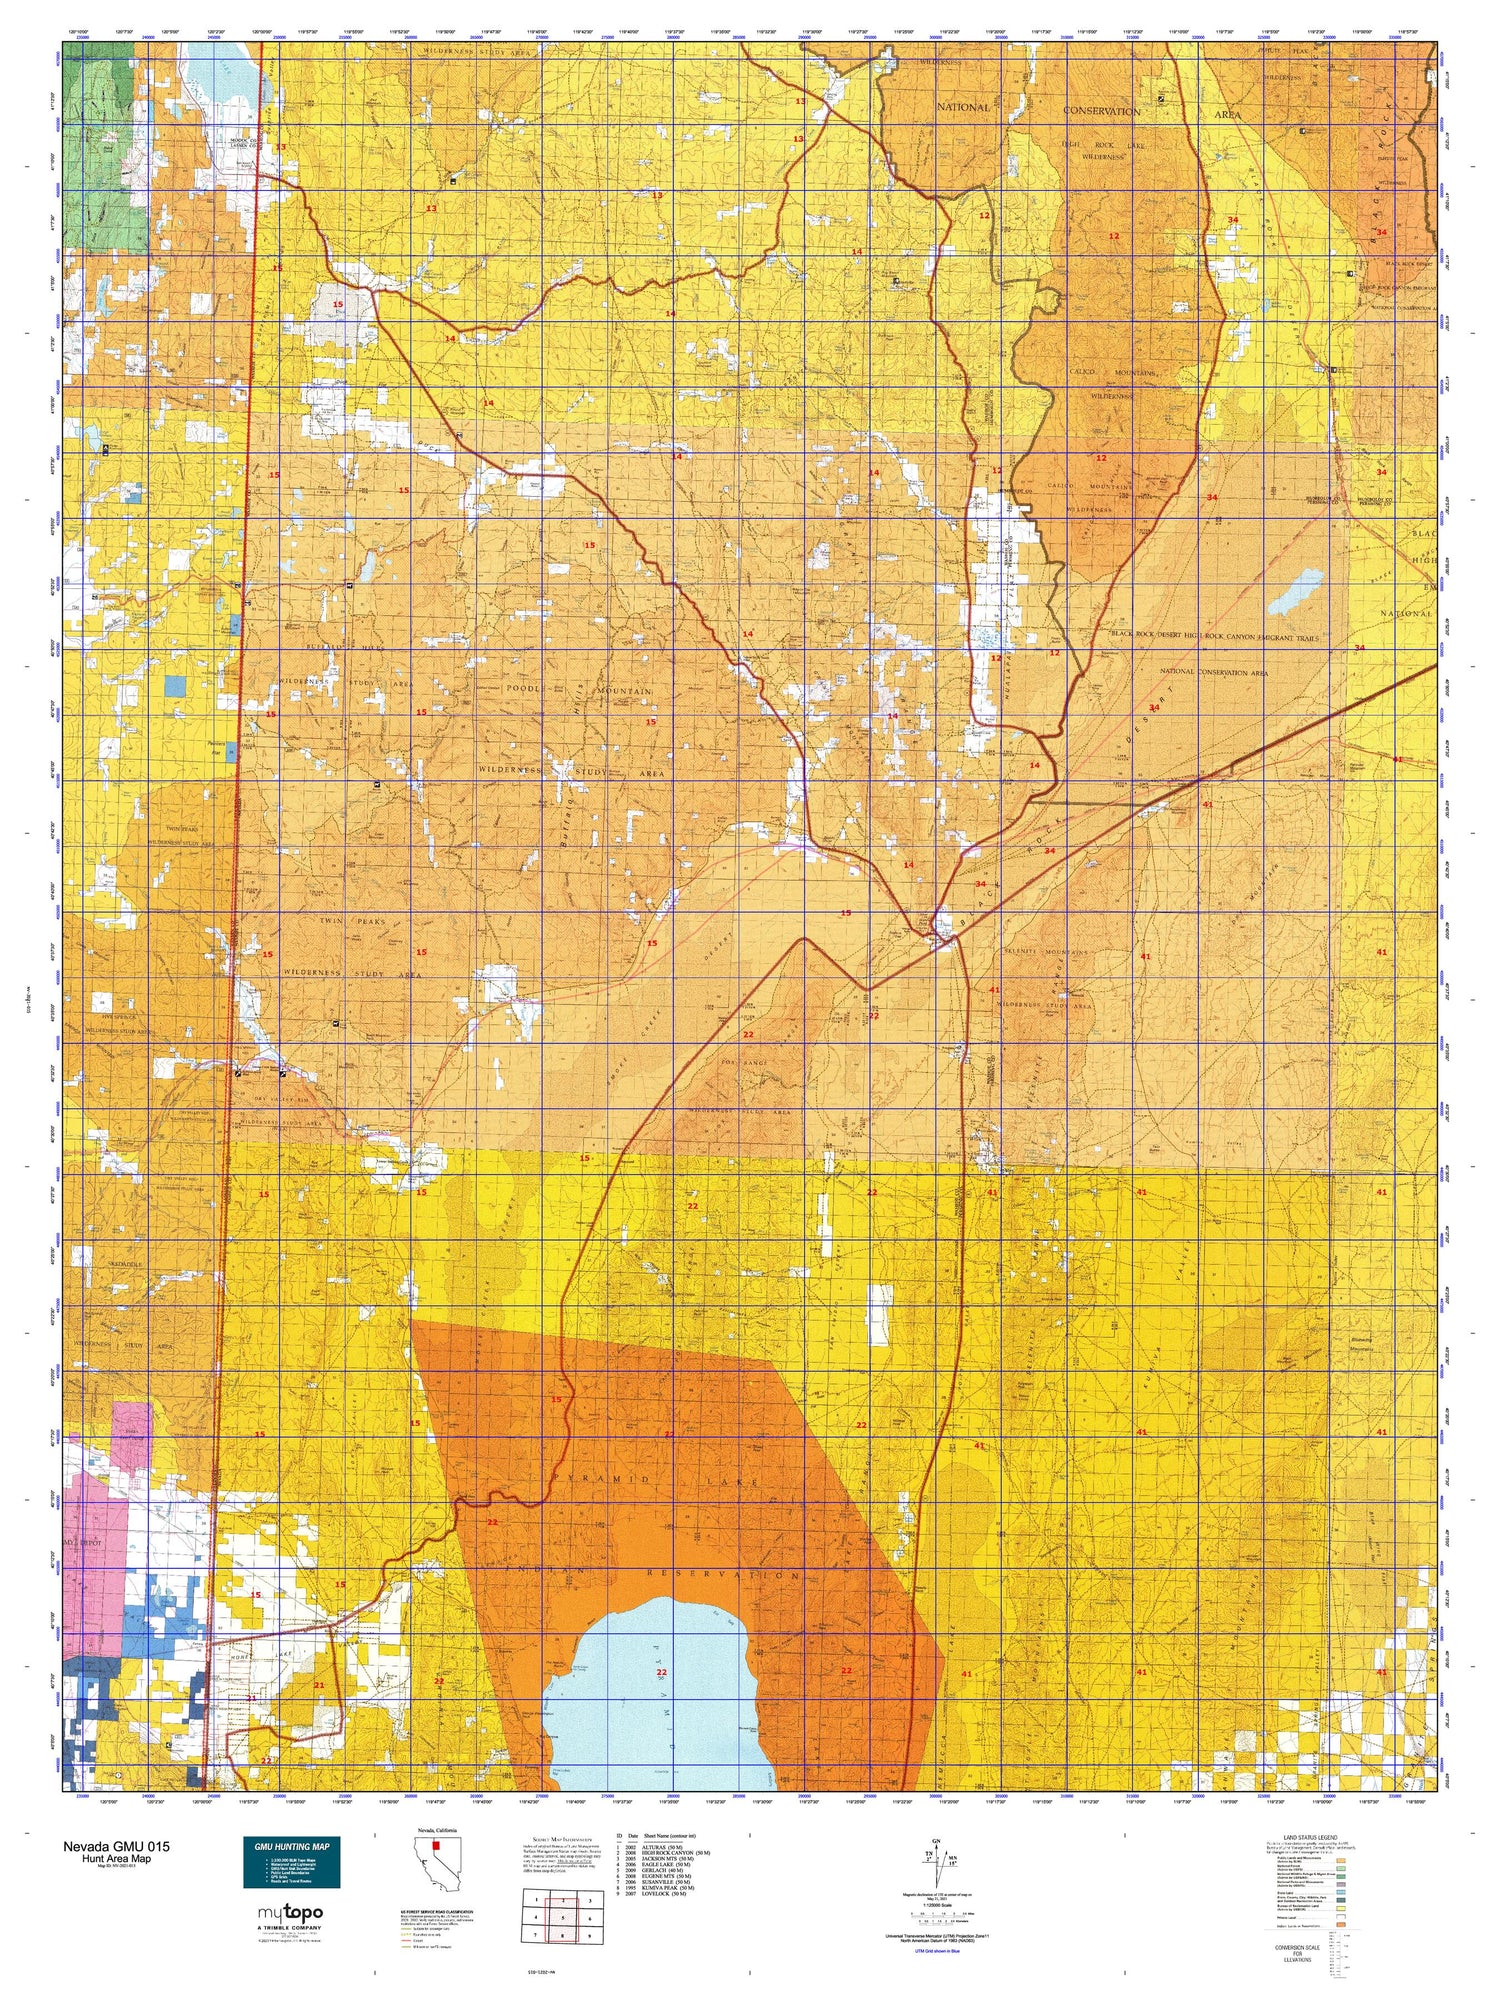 Nevada GMU 015 Map Image